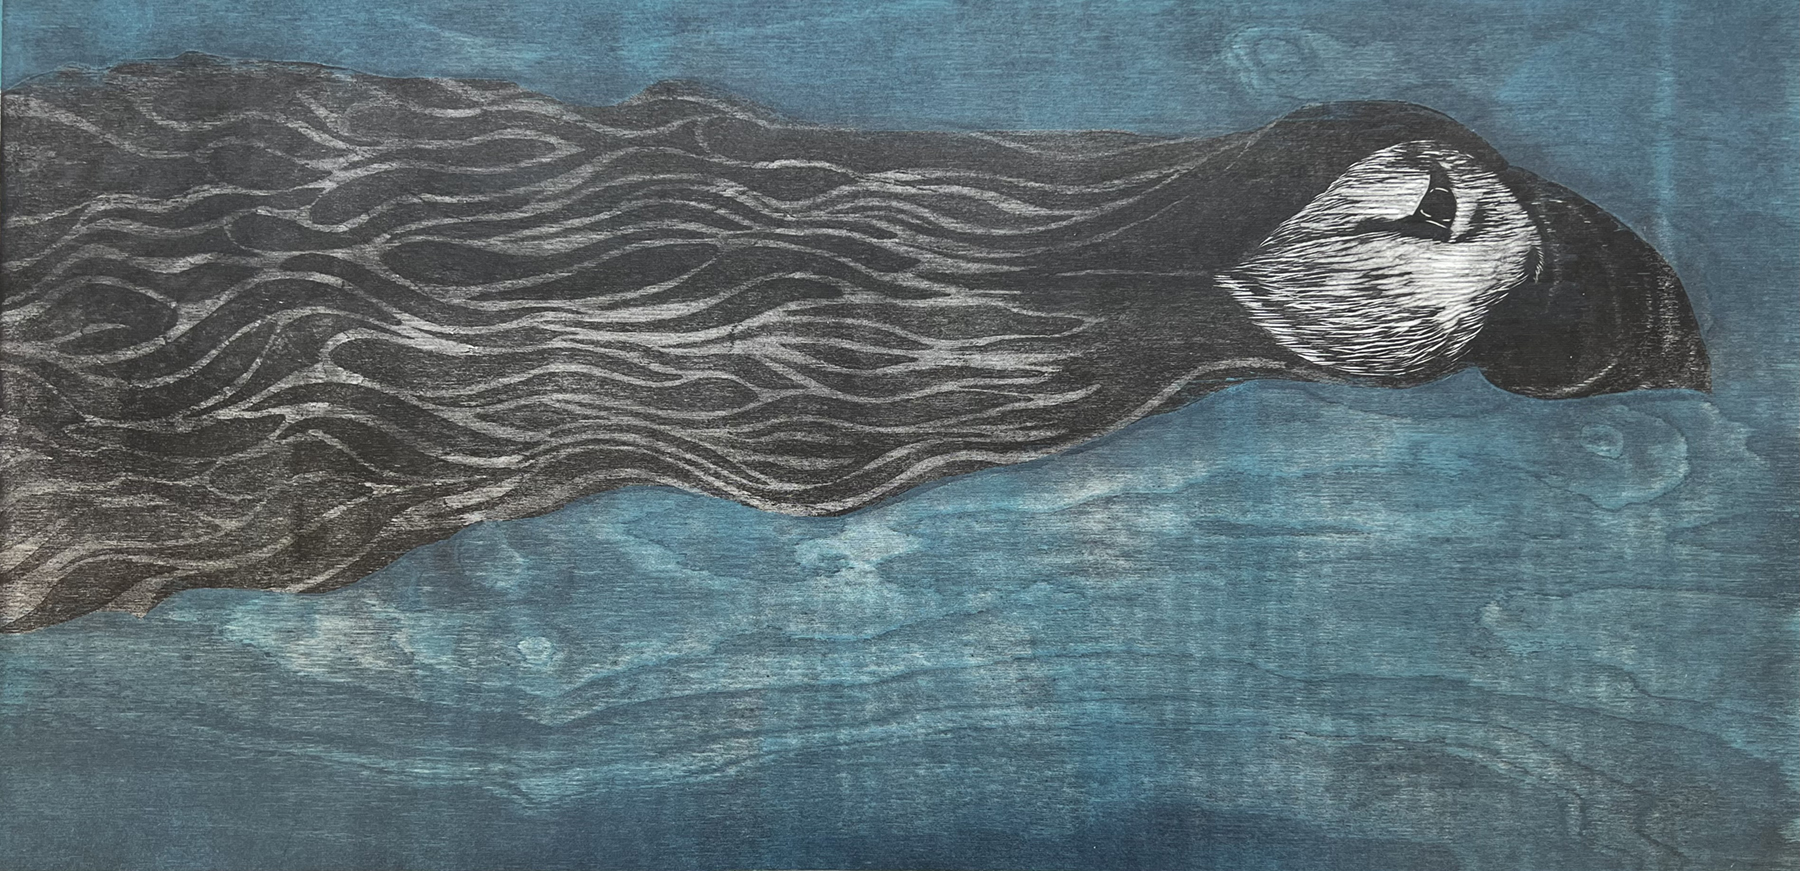 Puffin swimming, mokulito print by Susan Andrews